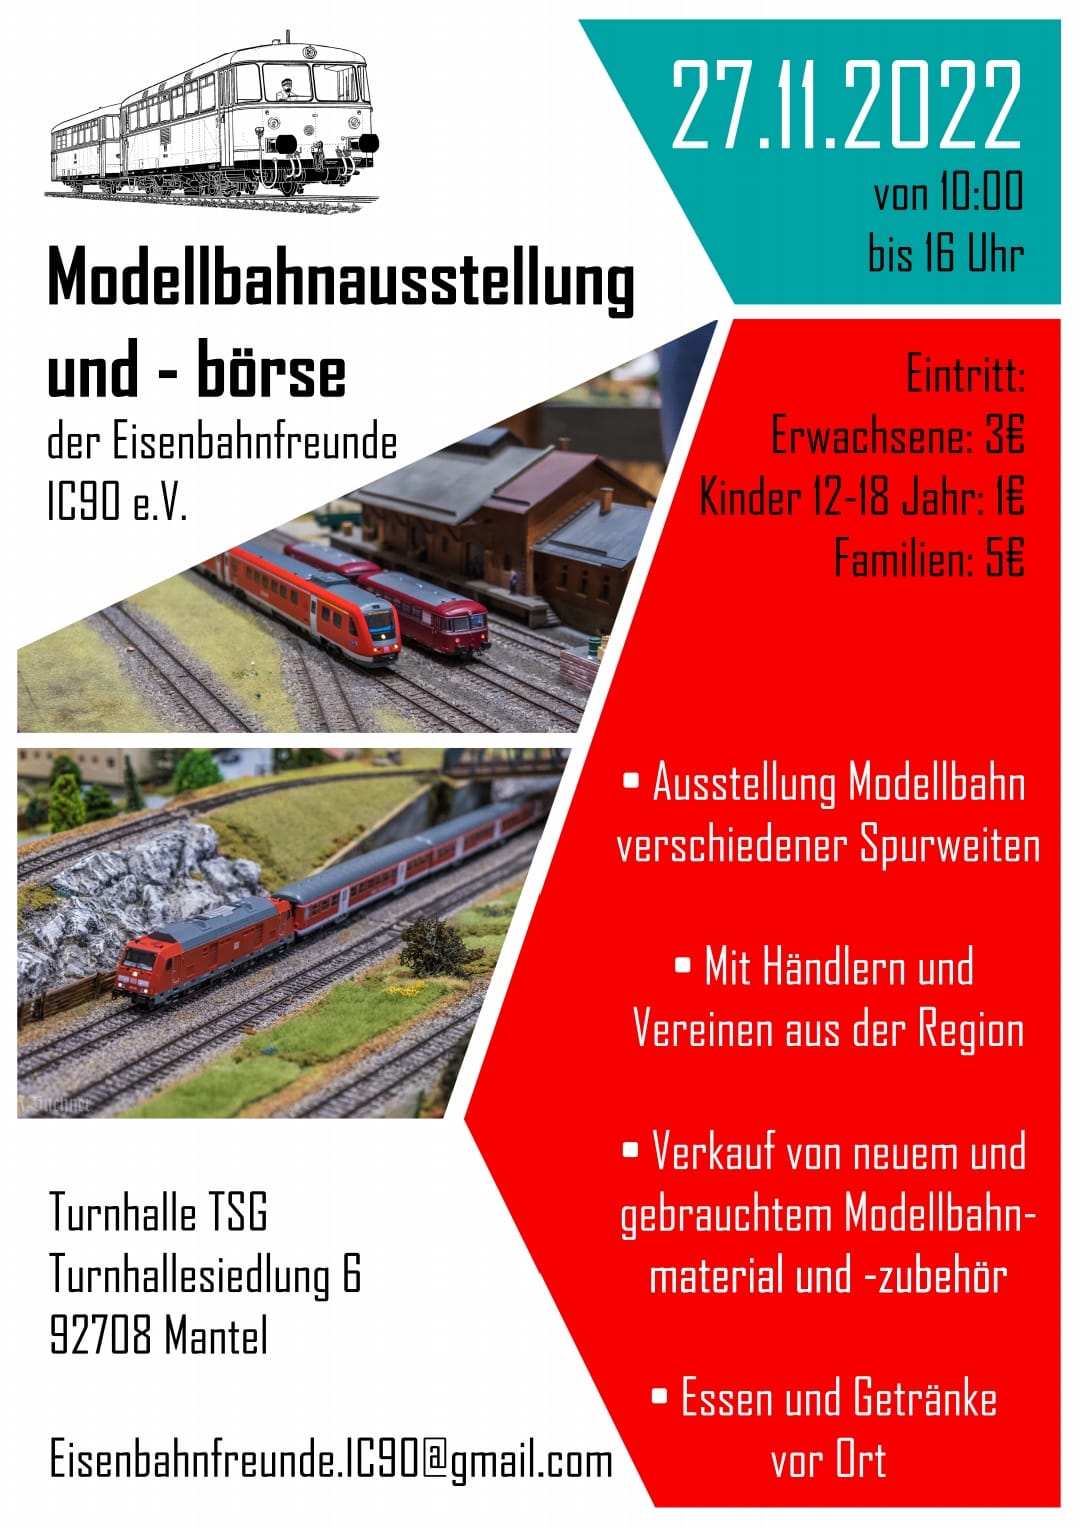 Modellbahnausstellung Mantel © Eisenbahnfreunde IC90